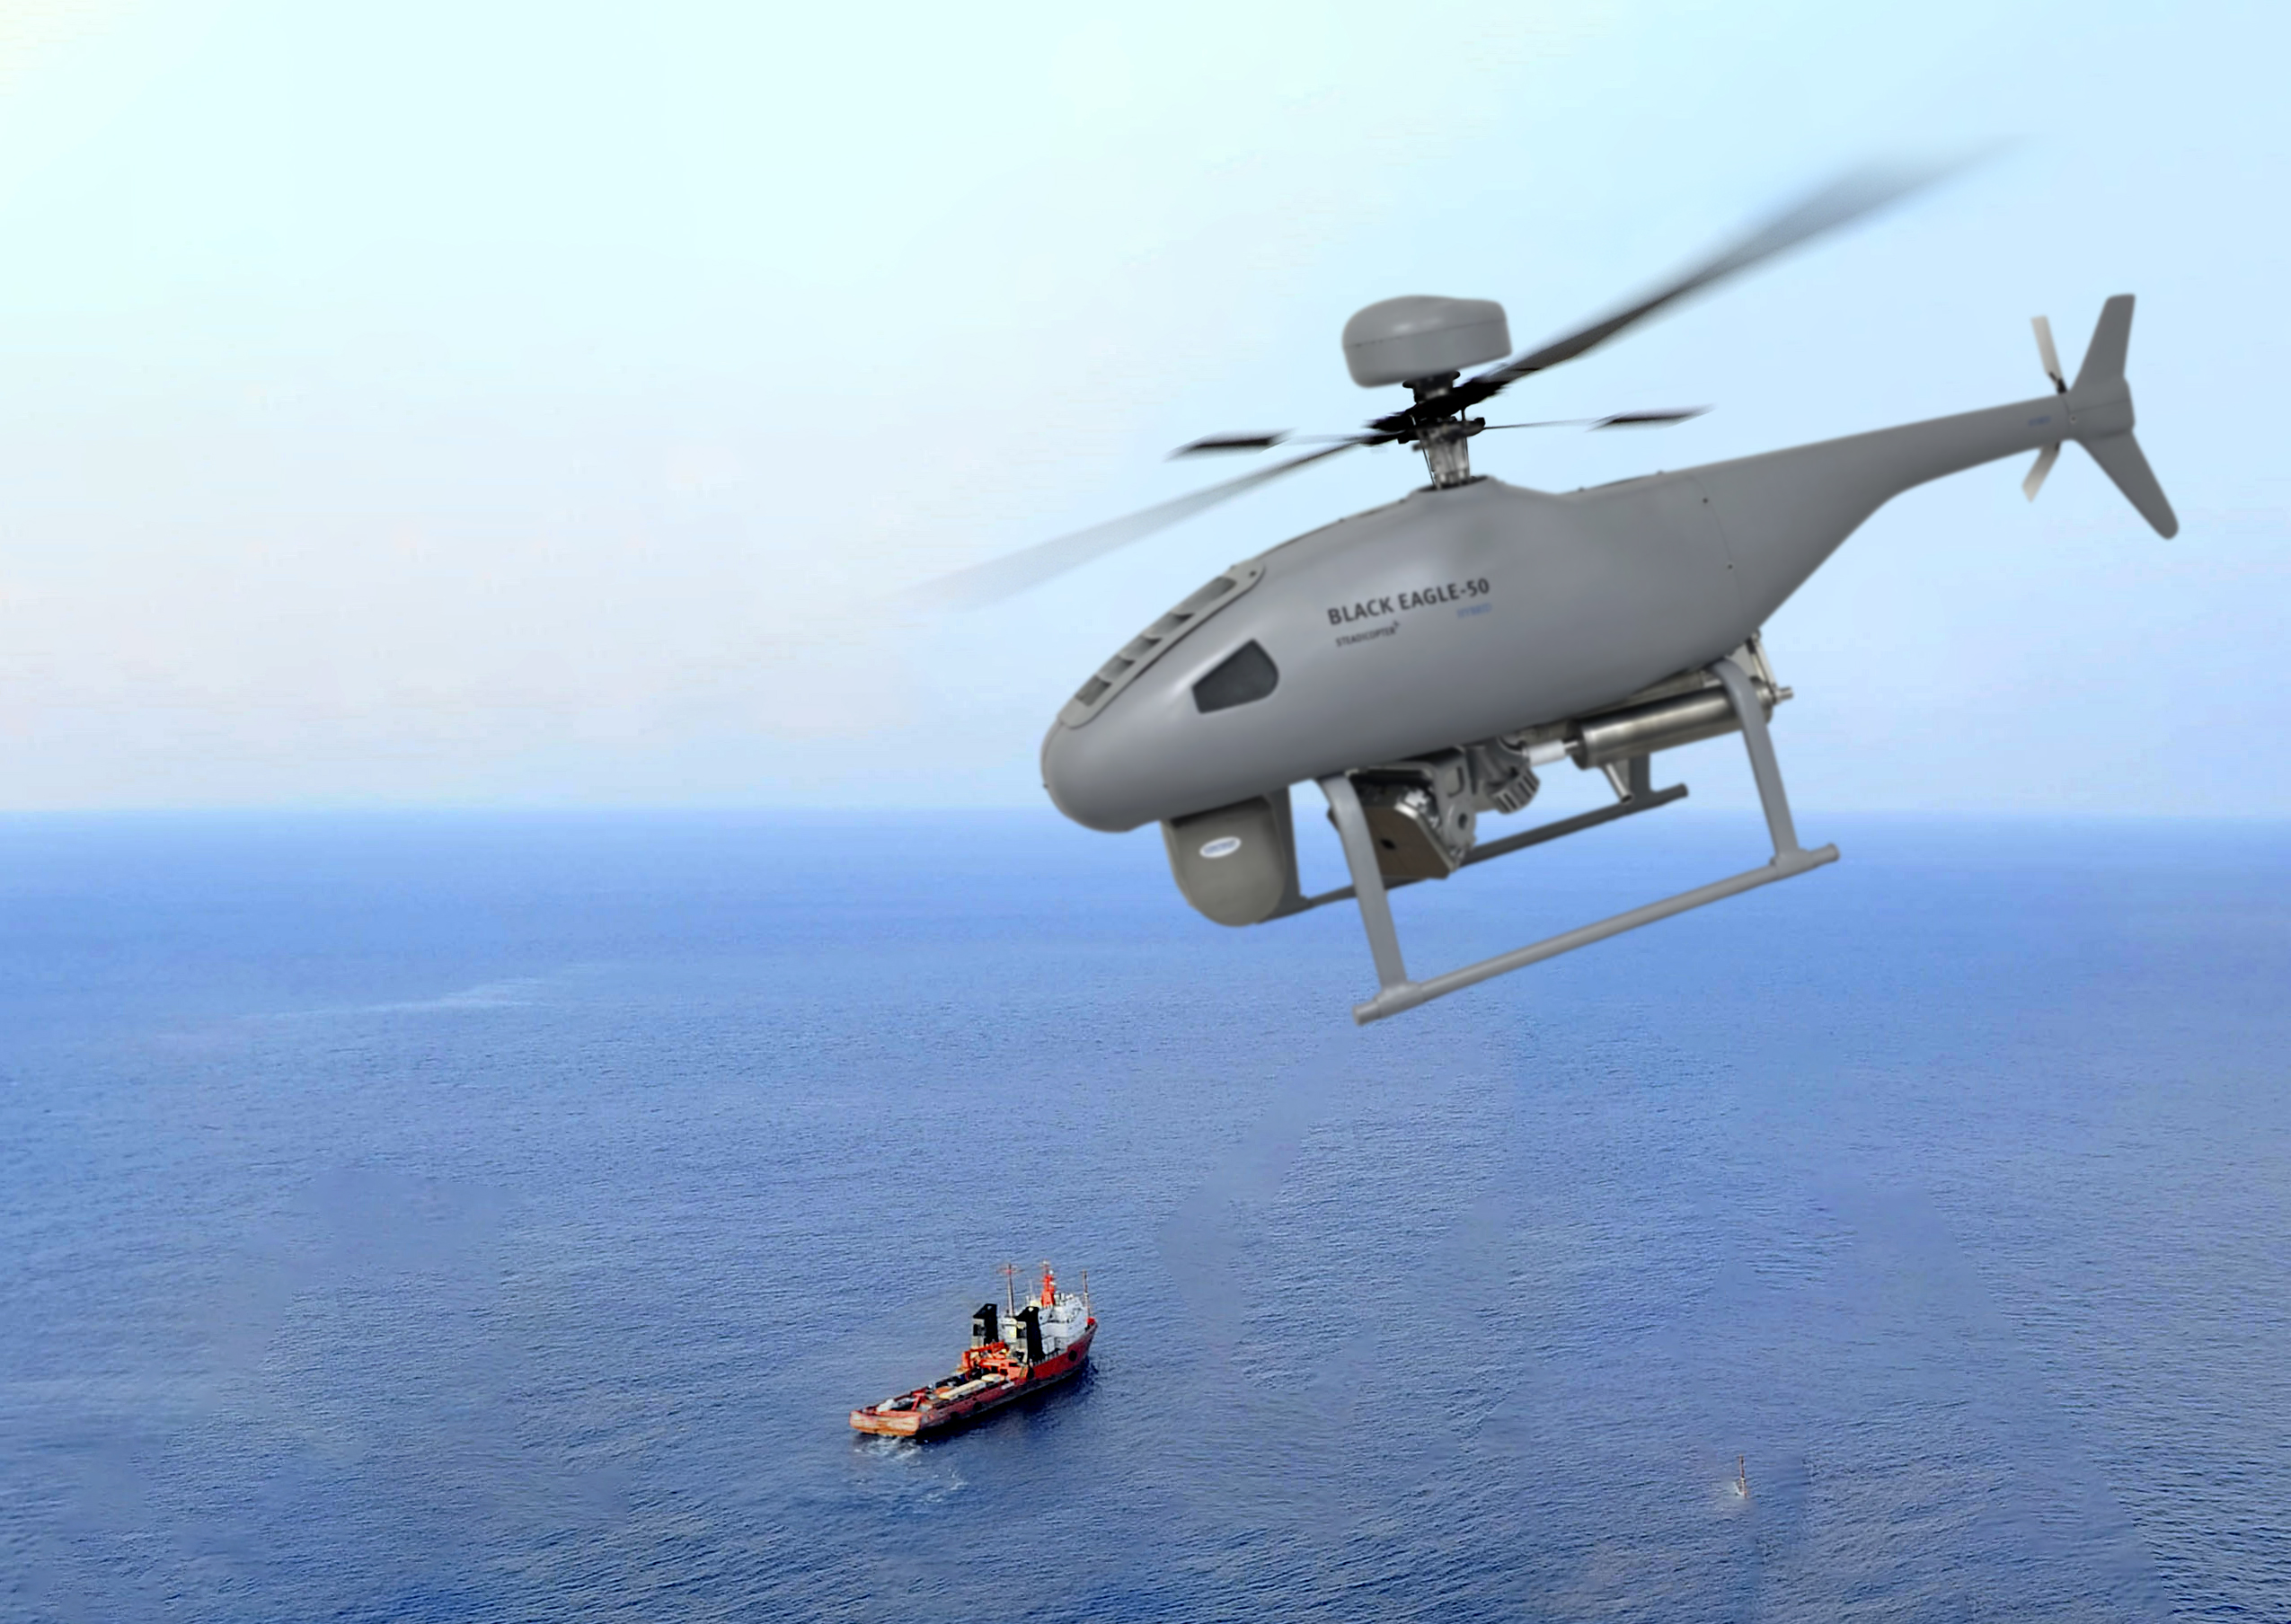 Steadicopter Bridges the Gulf with Black Eagle UAS